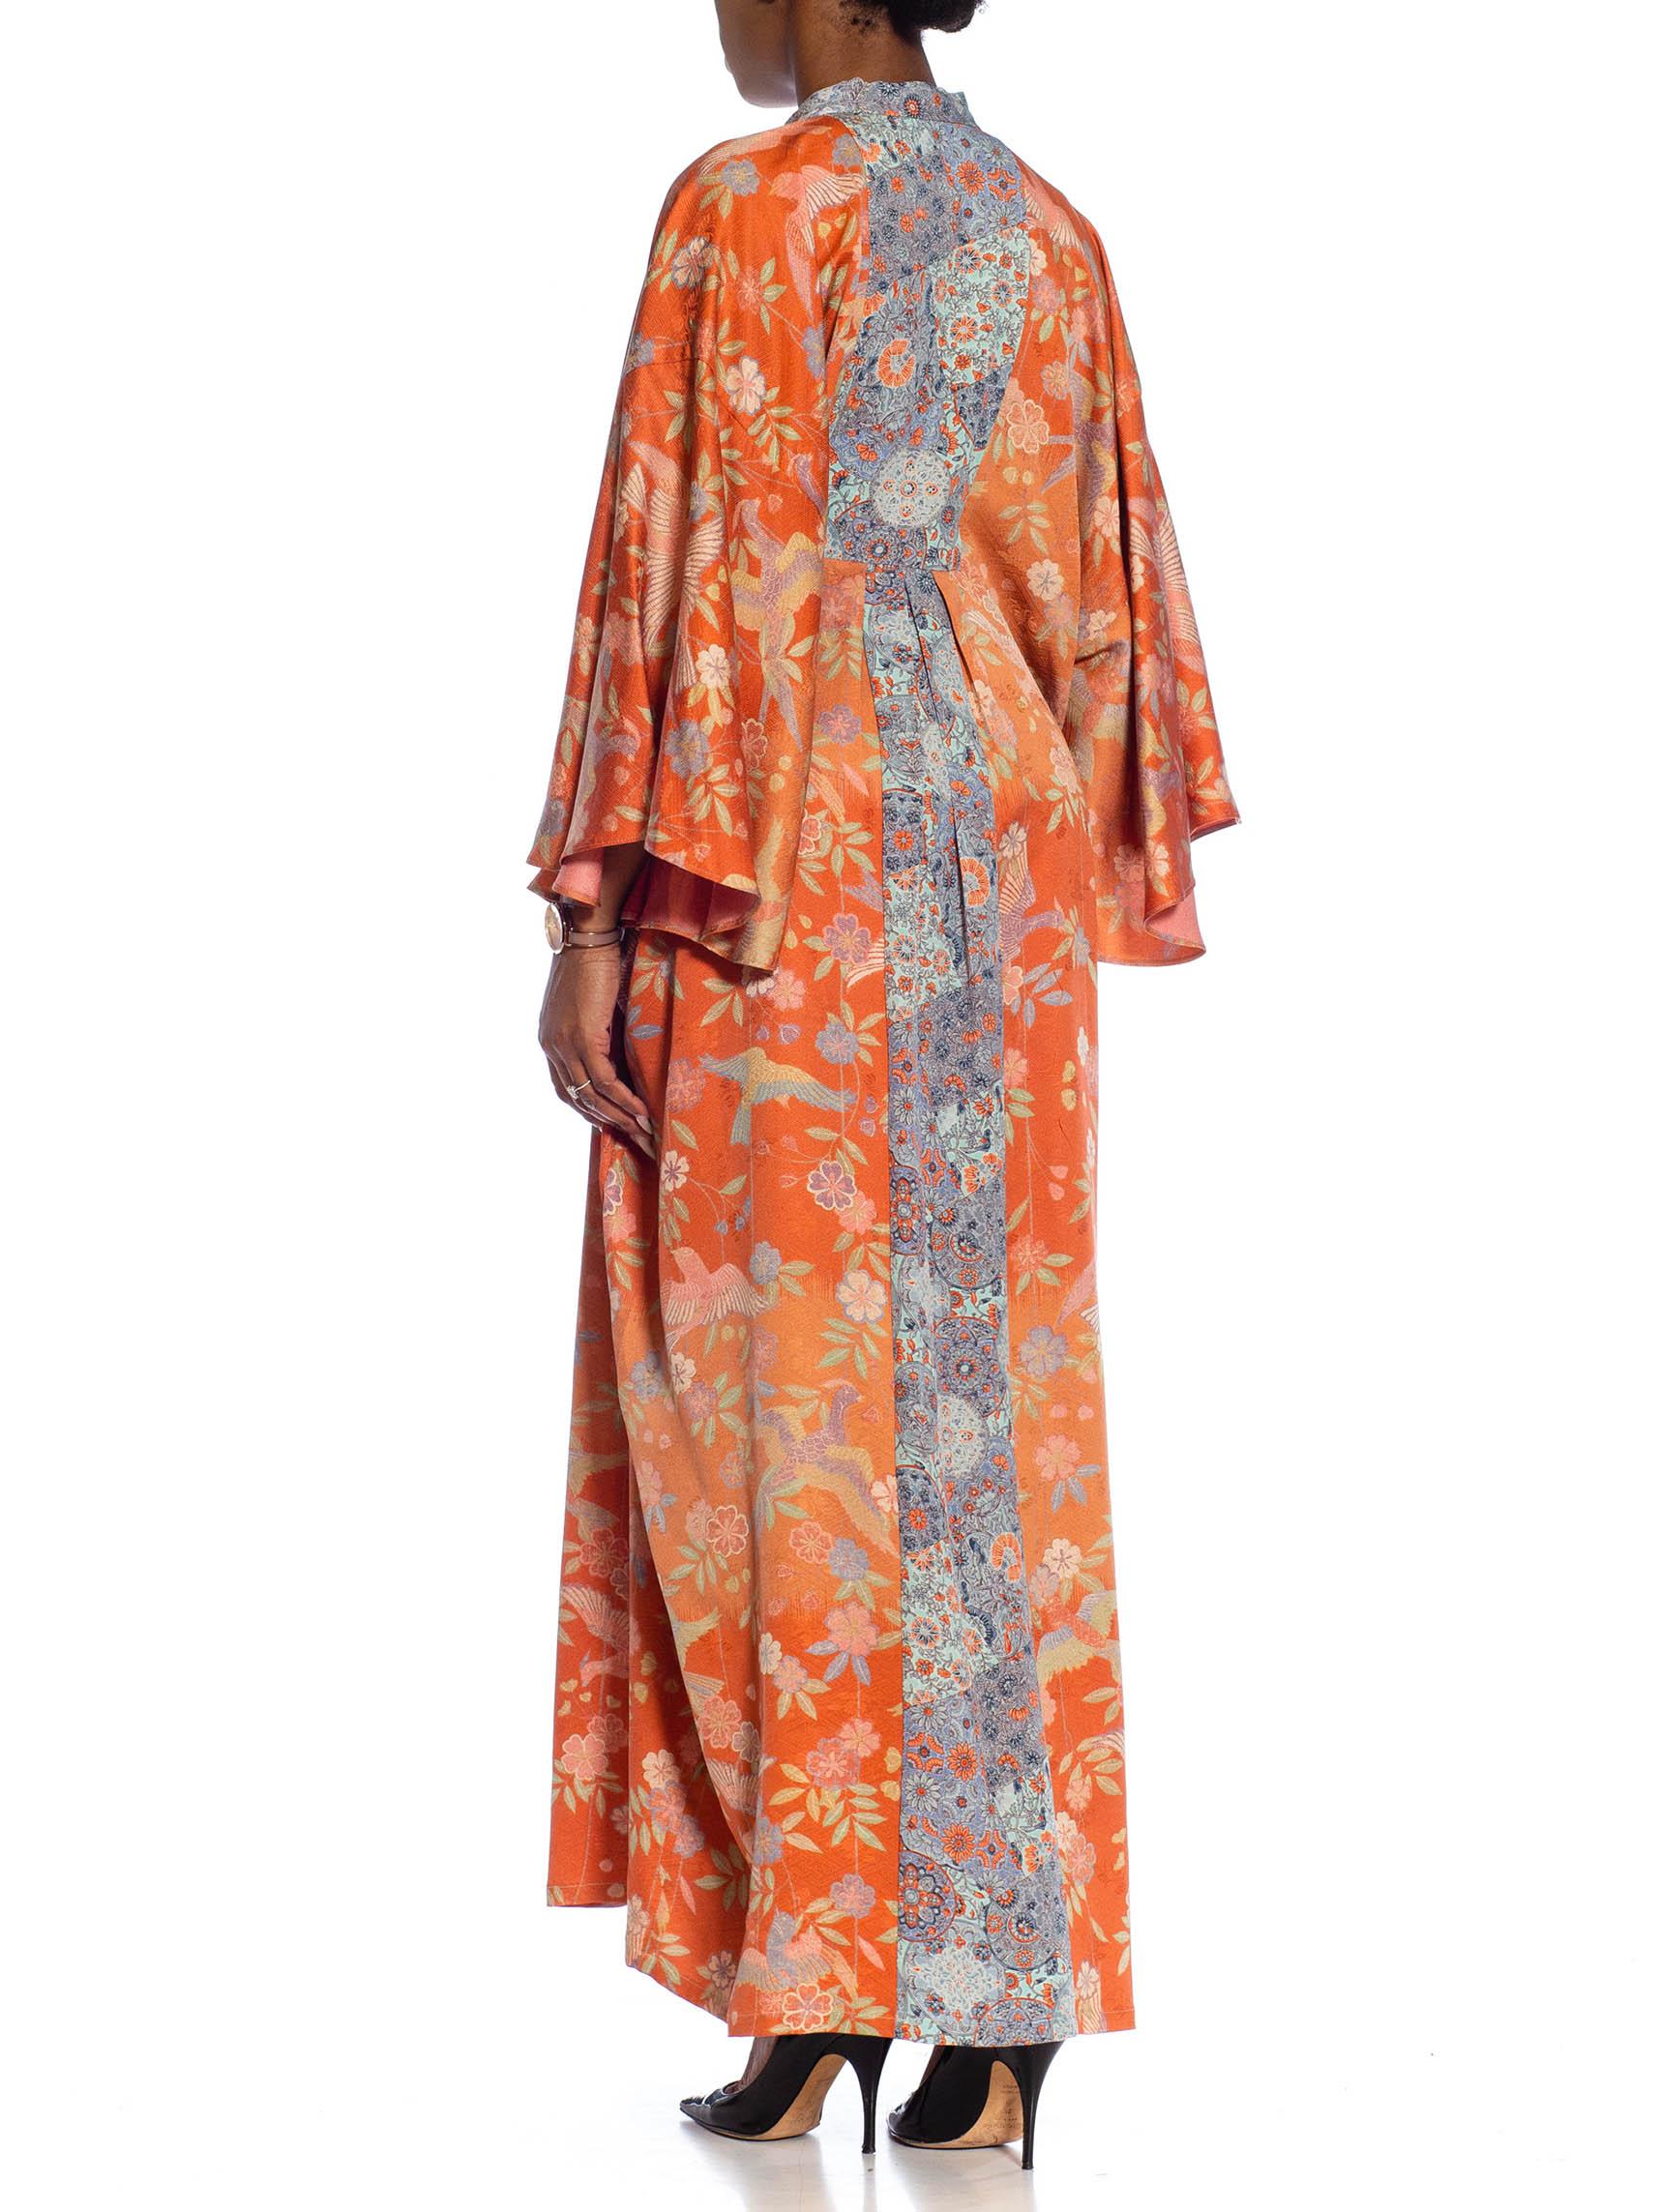 MORPHEW COLLECTION Orange Ombré Floral Japanese Kimono Silk Kaftan 4